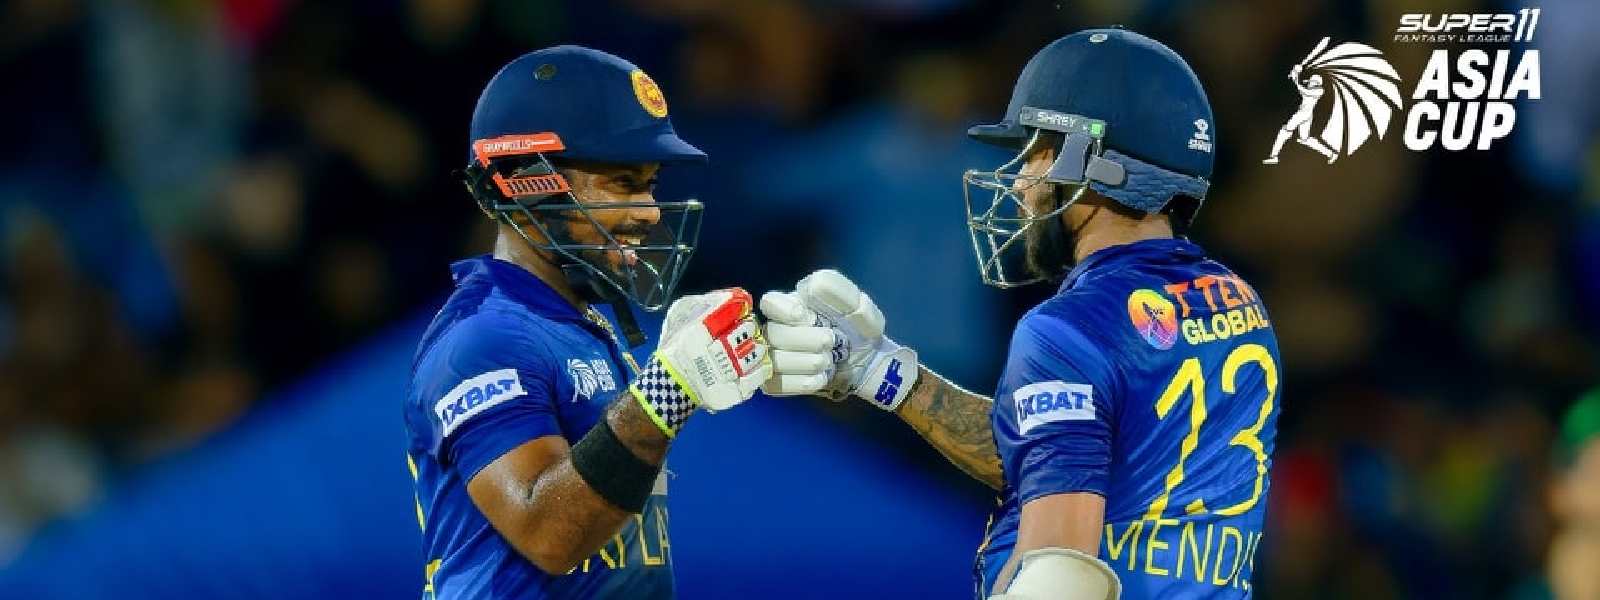 Sri Lanka sets up a final clash with India